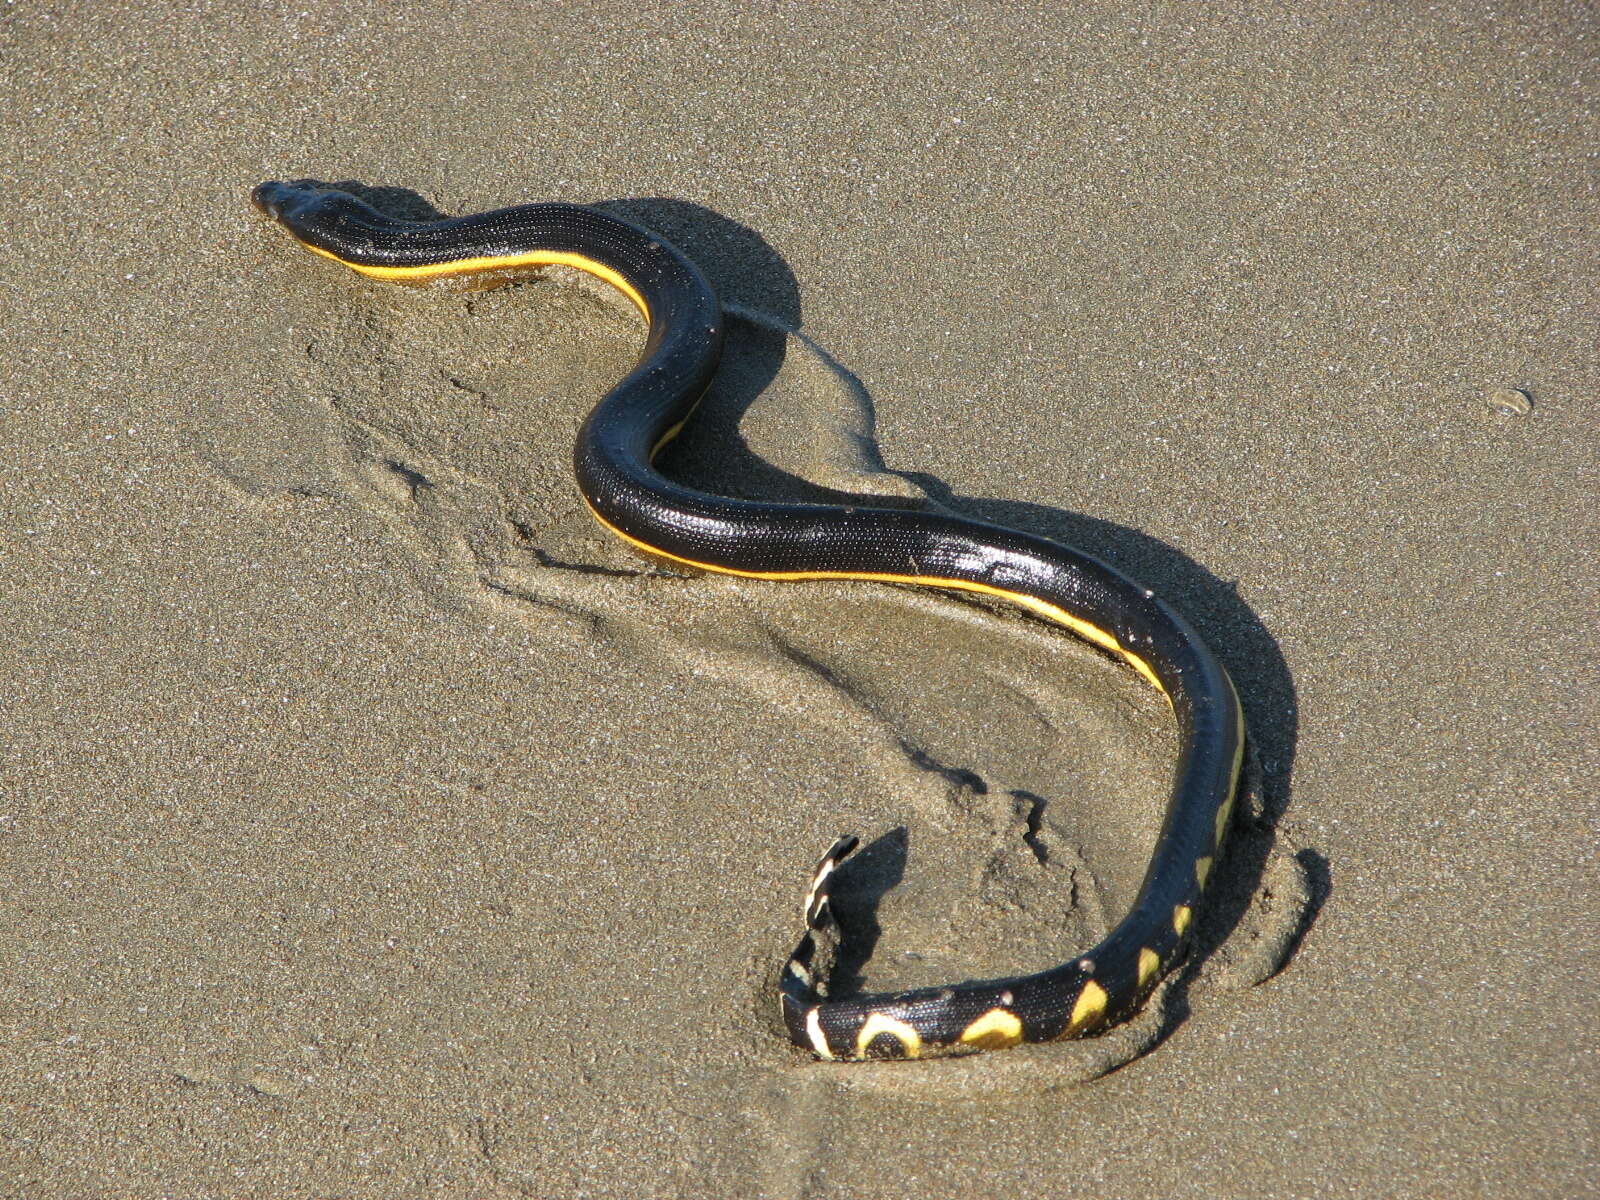 Image of Graceful small-headed or slender seasnake